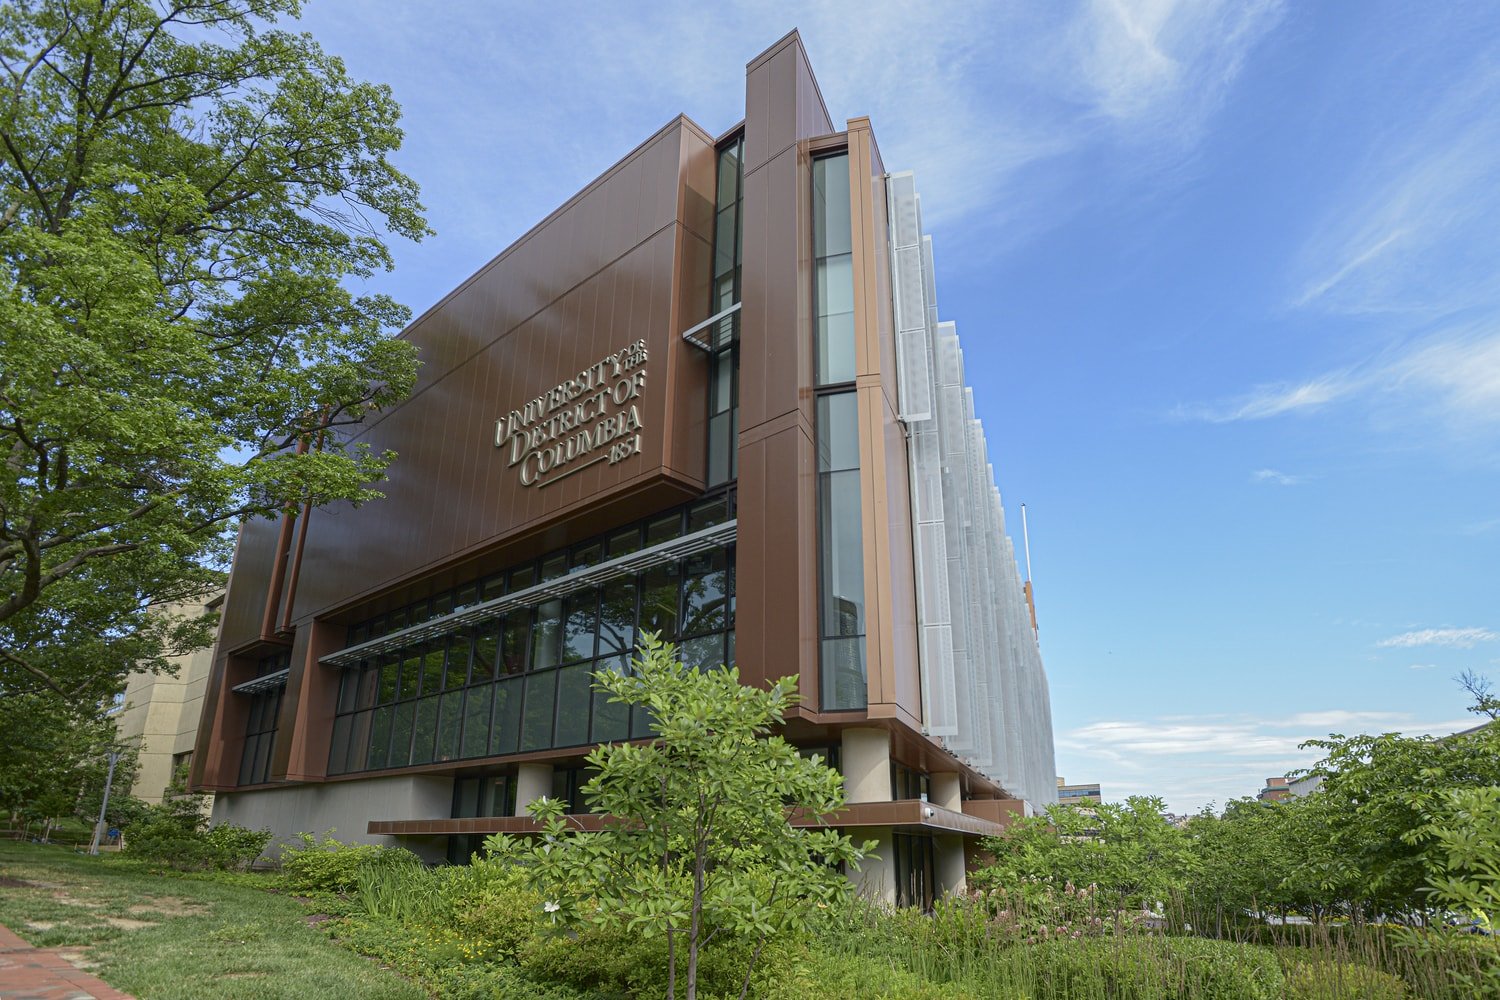 University of the Districs of Columbia - Van Ness - Washington, DC